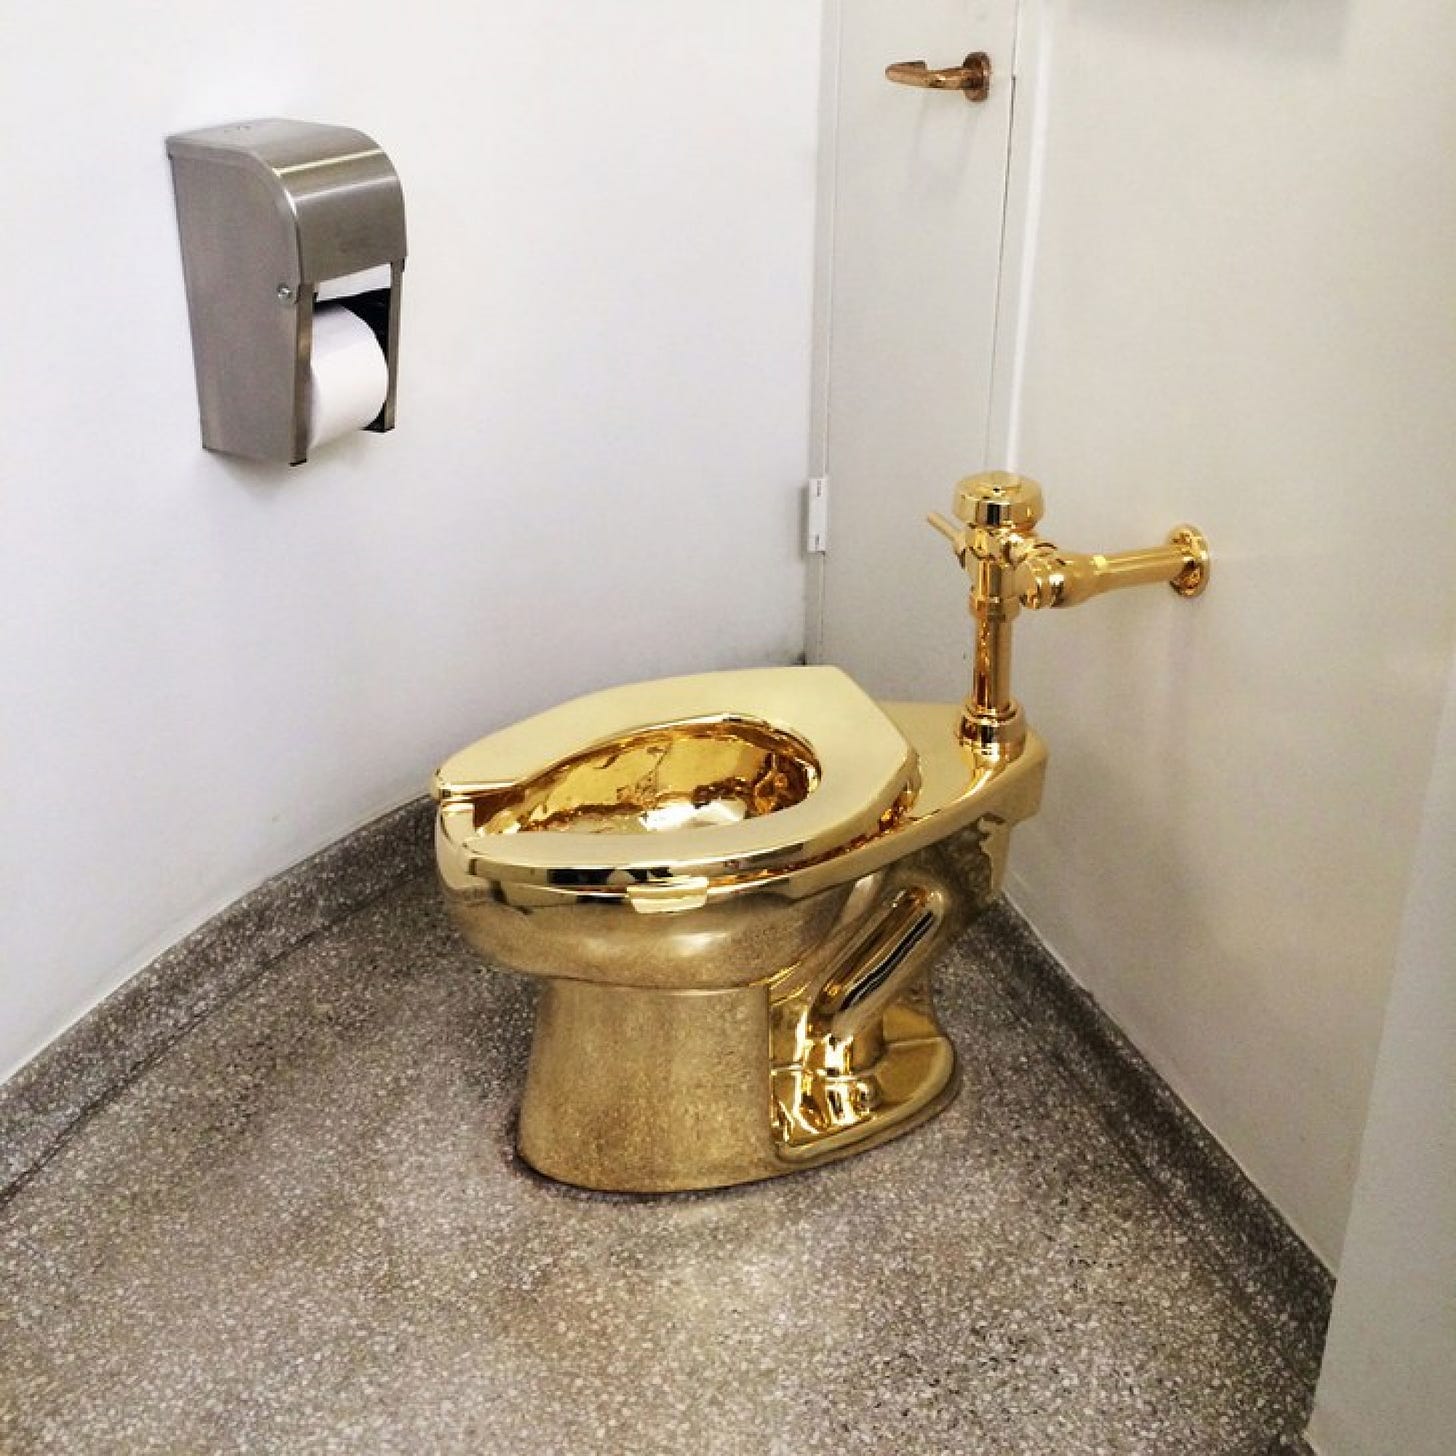 Maurizio Cattelan's America & The stolen golden toilet – Public Delivery